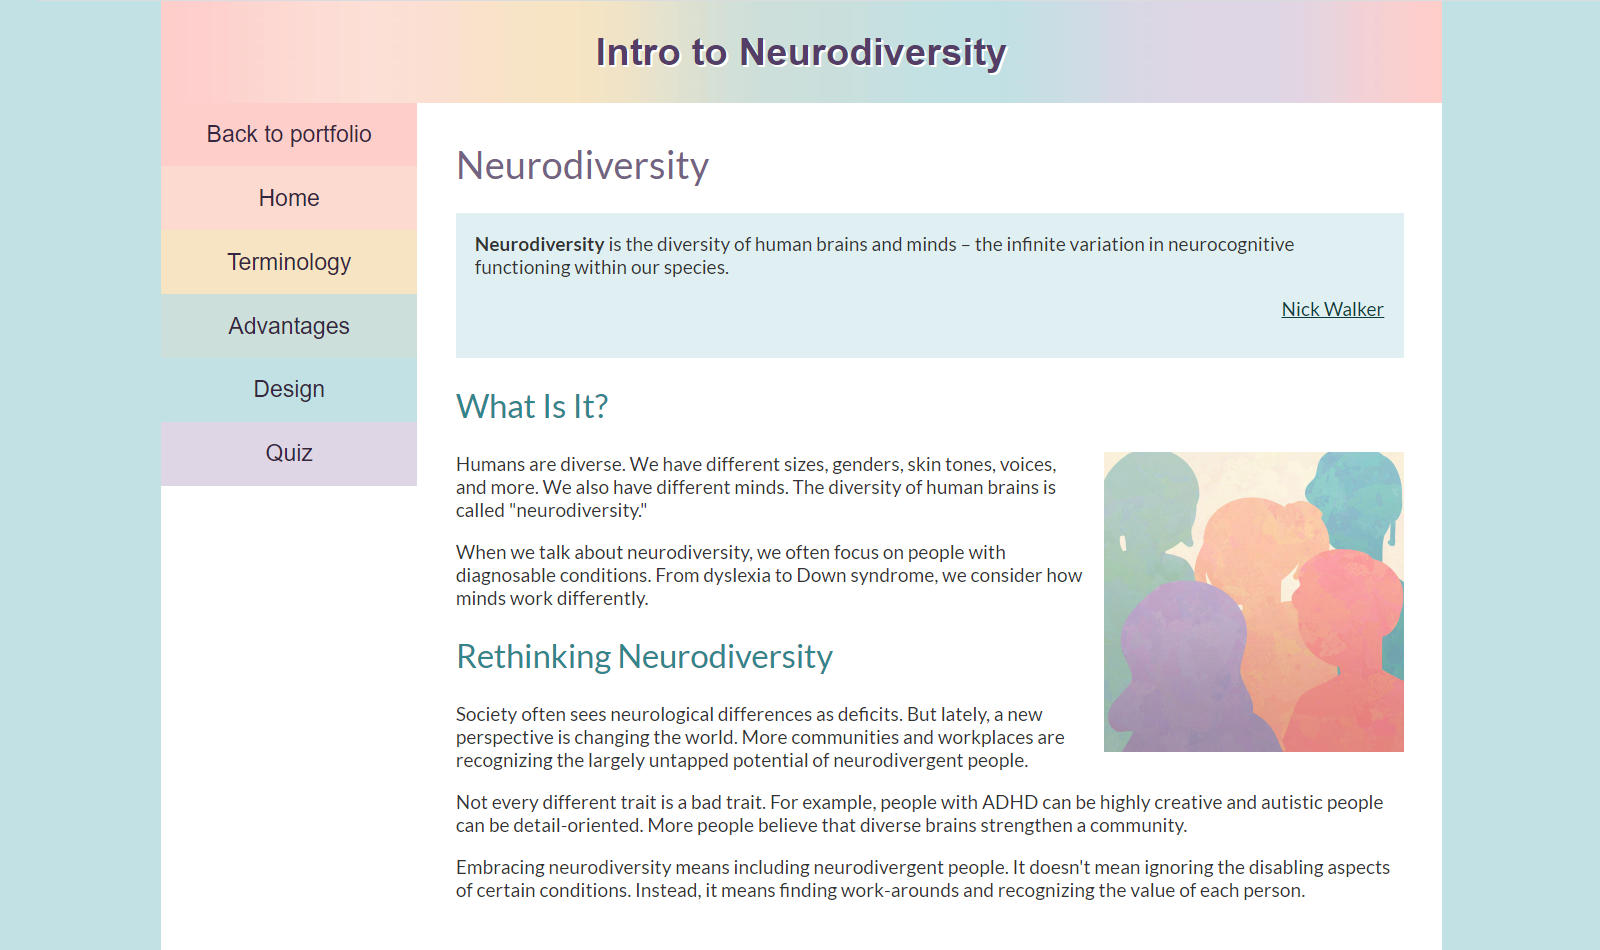 Neurodiversity